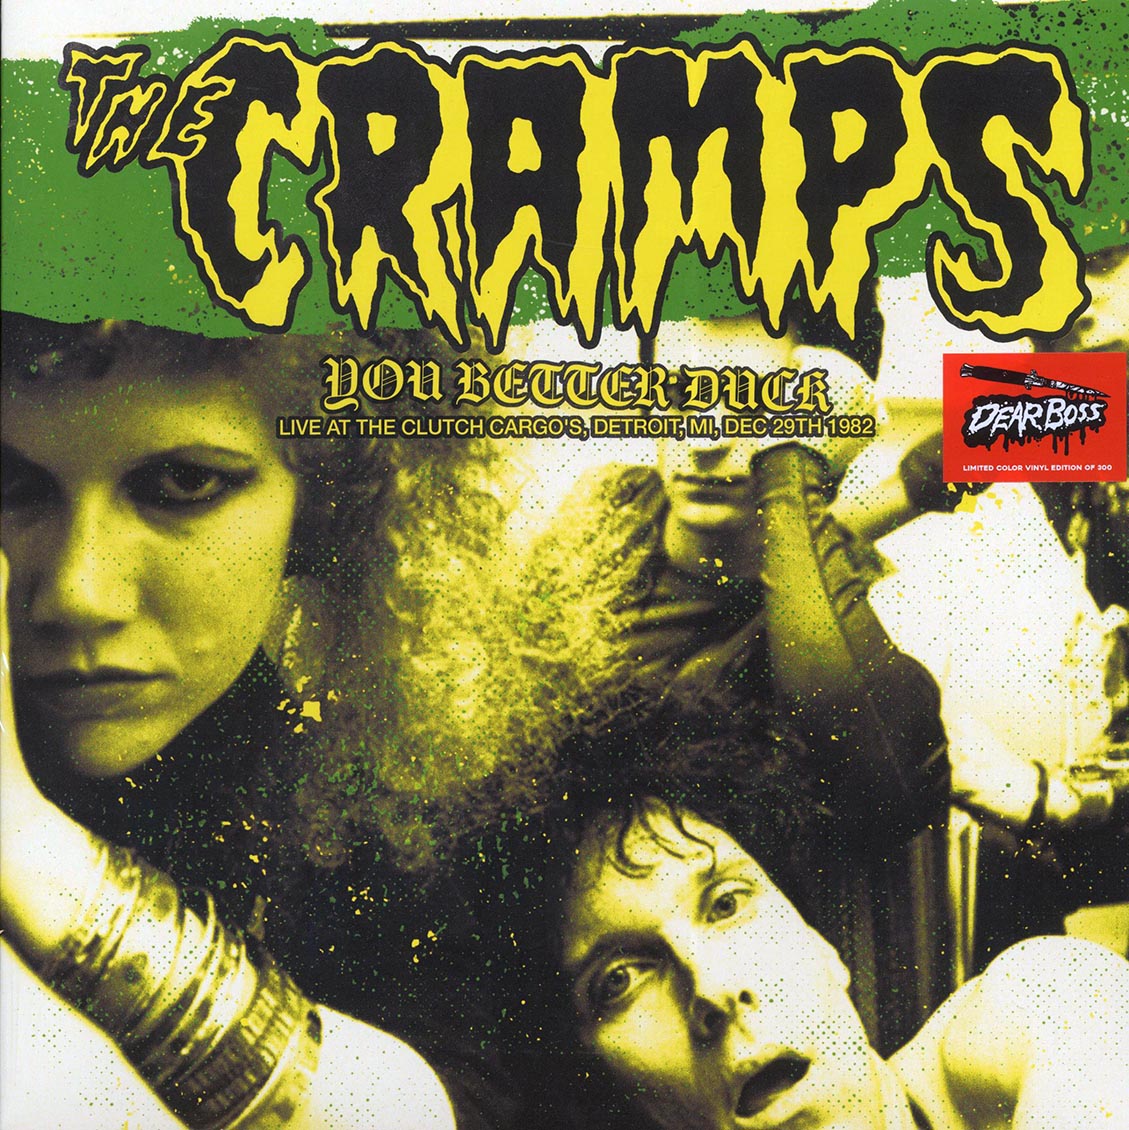 The Cramps - You Better Duck: Live At The Clutch Cargo's, Detroit, MI, Dec 29th 1982 (ltd. 300 copies made) (green vinyl) - Vinyl LP